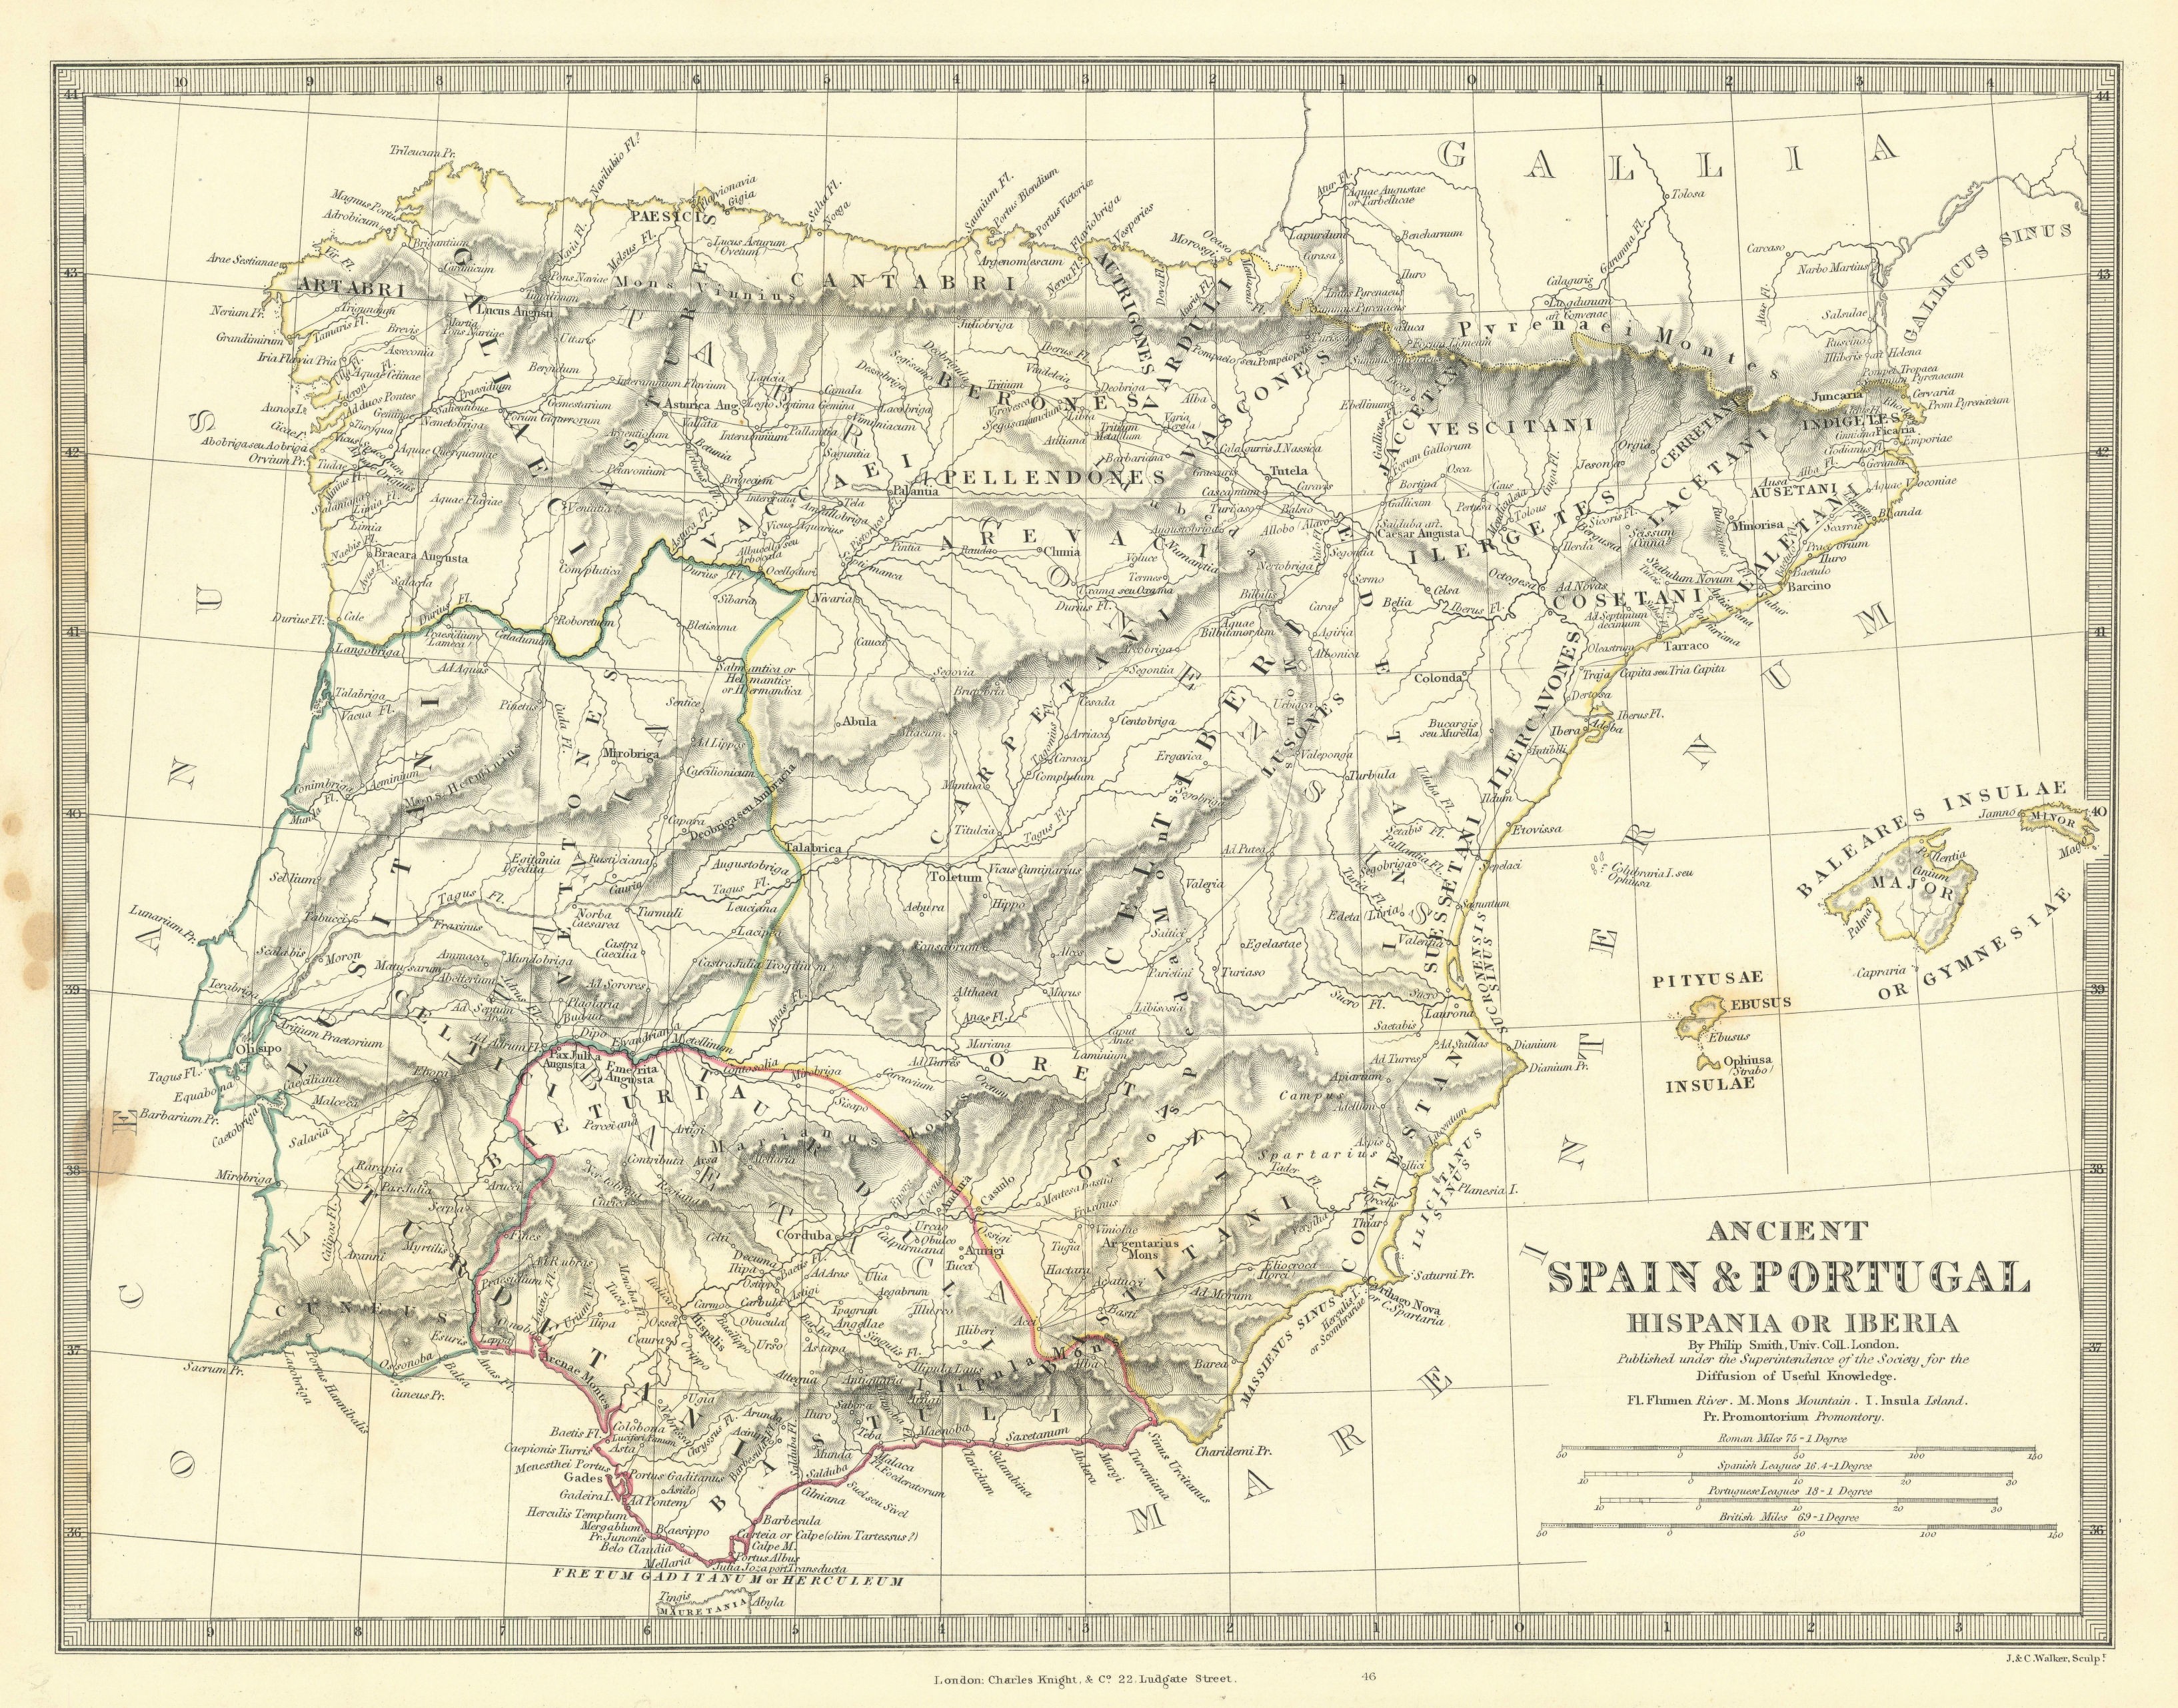 HISPANIA IBERIA. Ancient Spain & Portugal. Roman names & roads. SDUK 1844 map